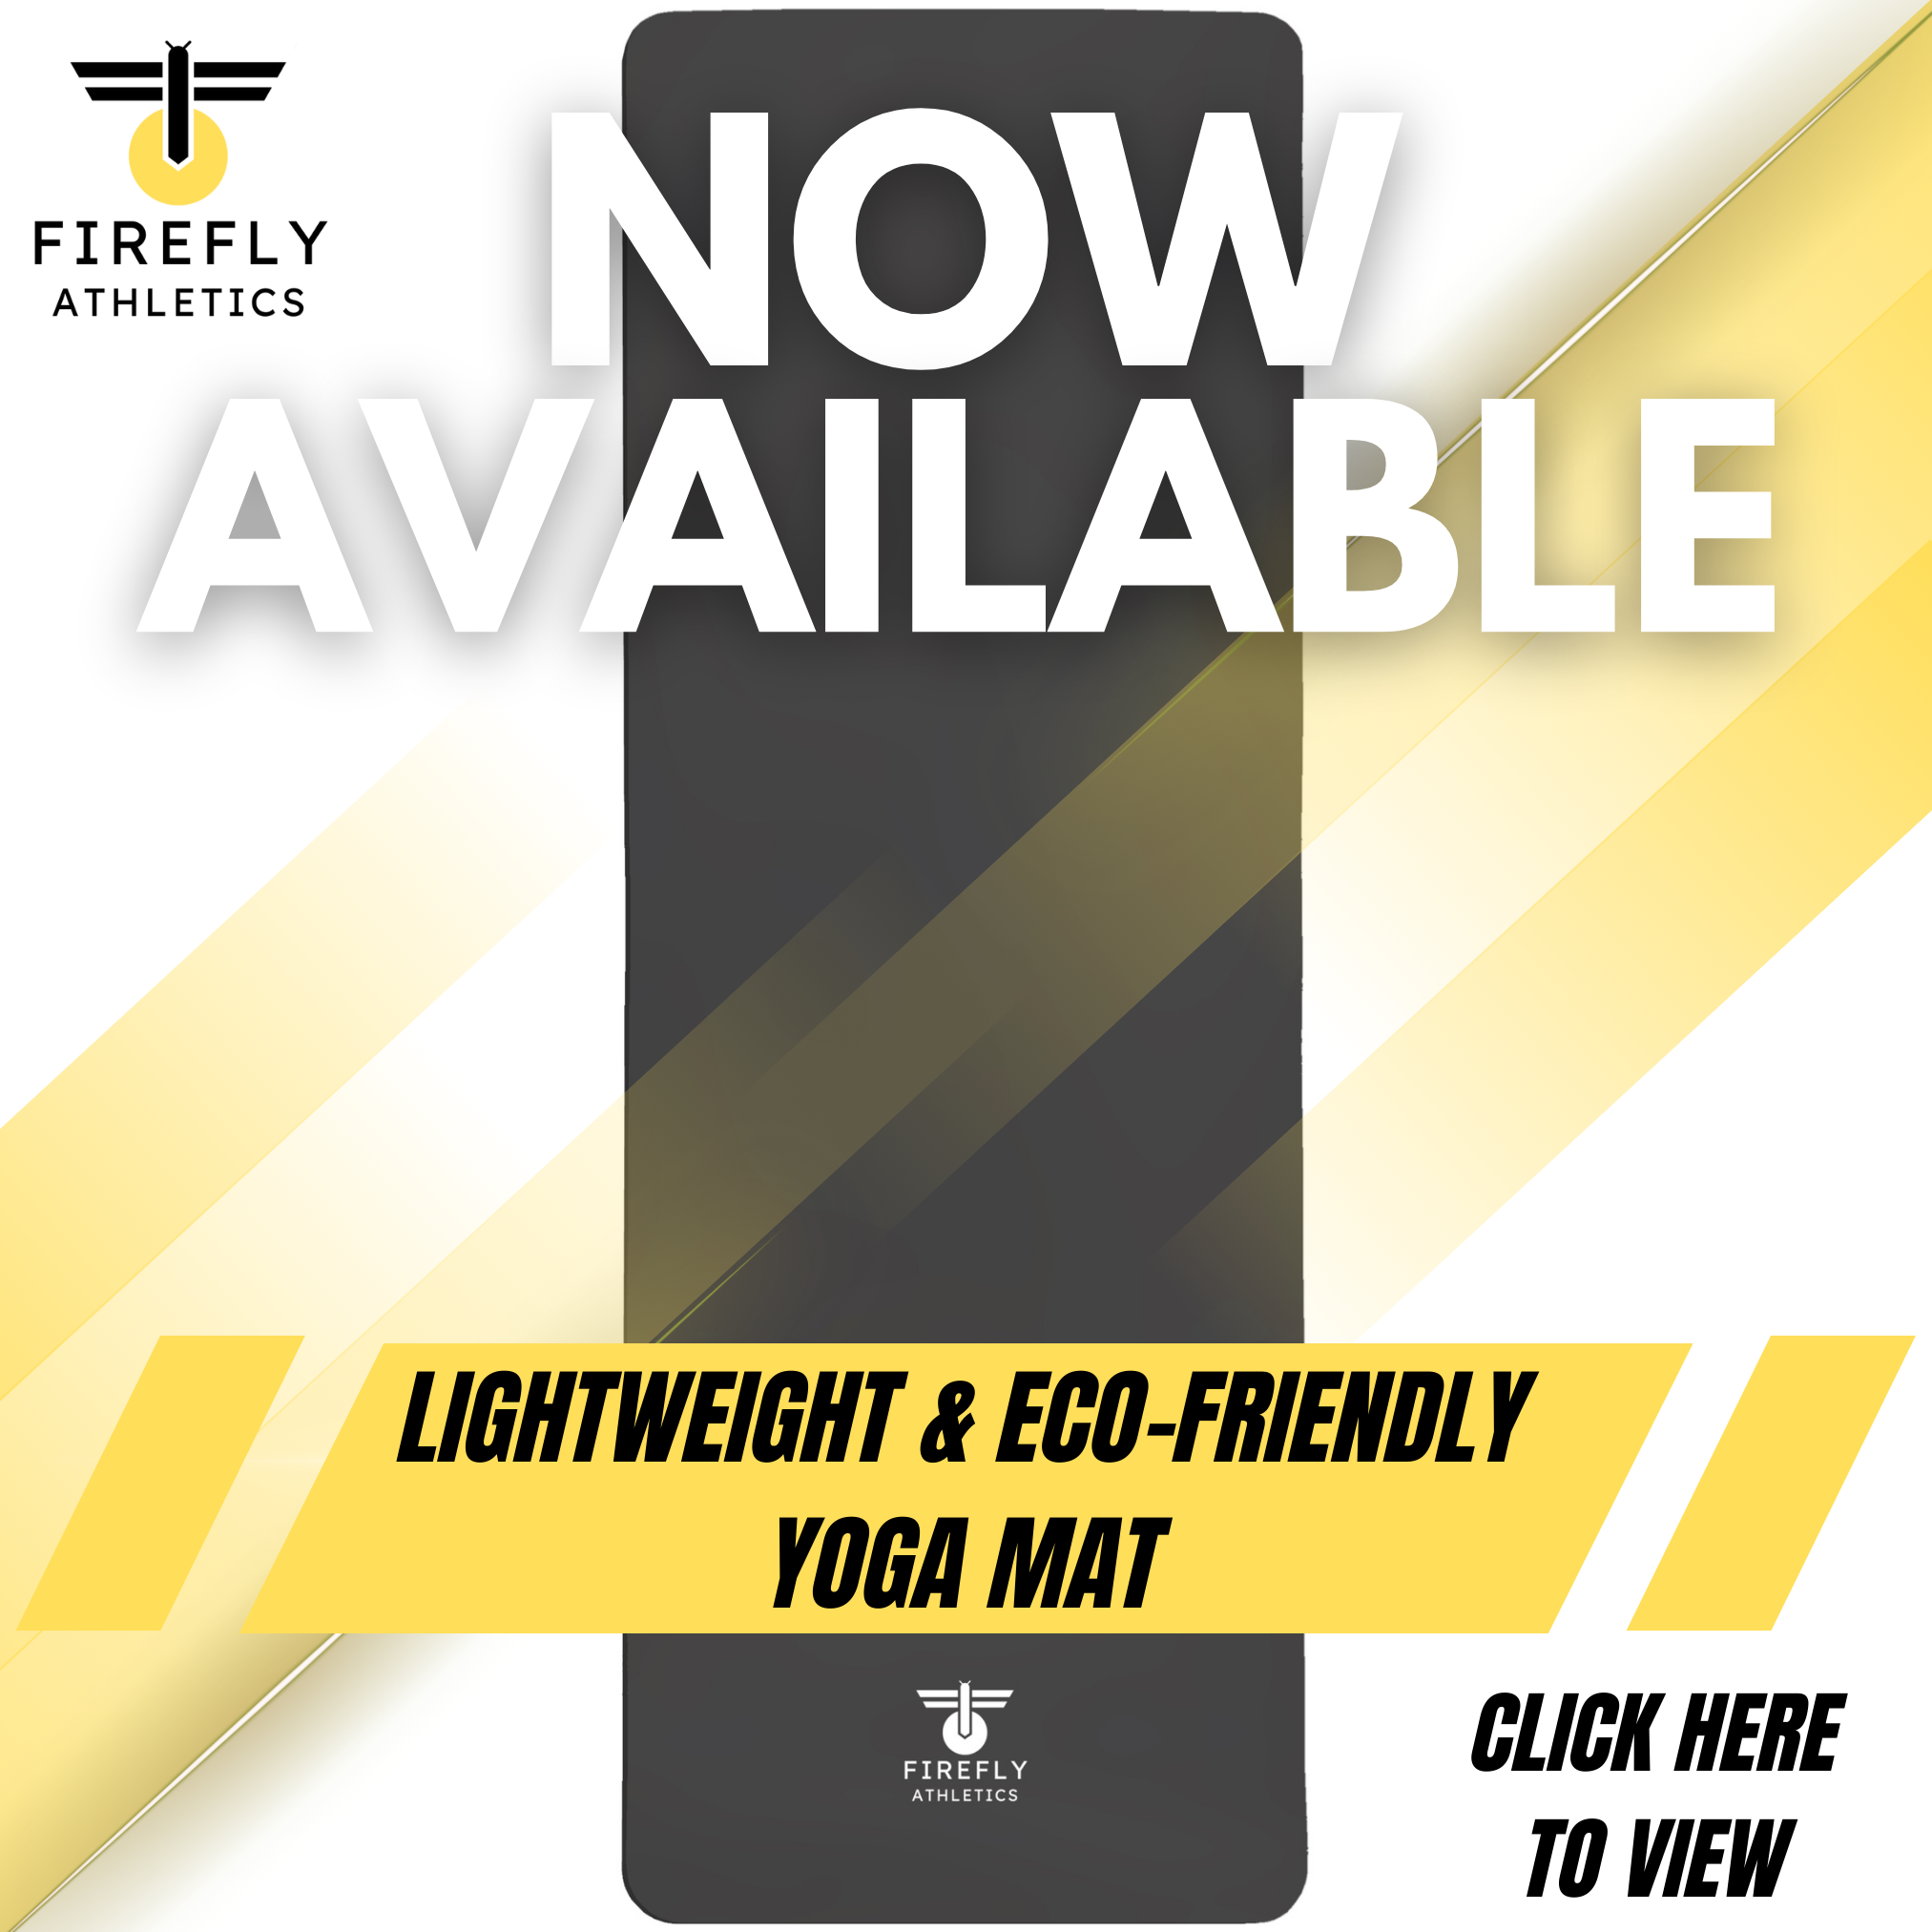 Firefly Athletics – Athletics, Fitness Equipment, Sportswear, and Yoga.